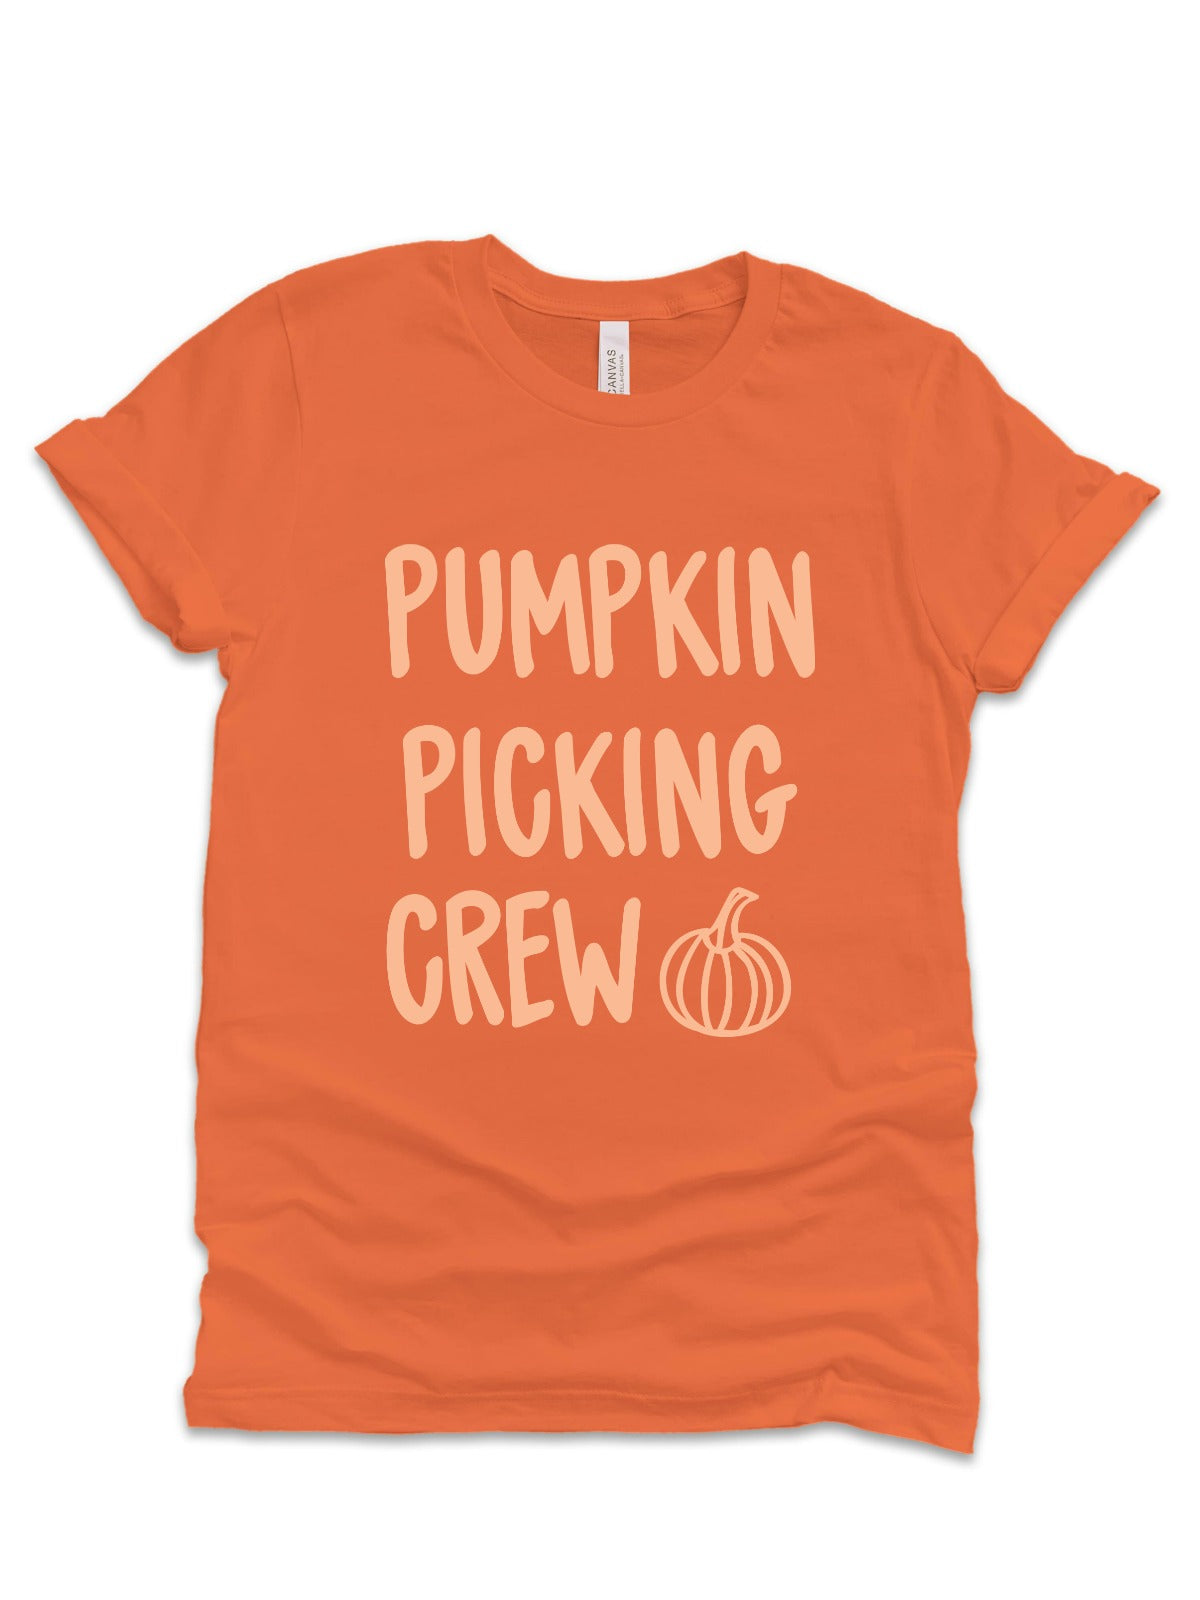 pumpkin picking crew orange adult shirt unisex